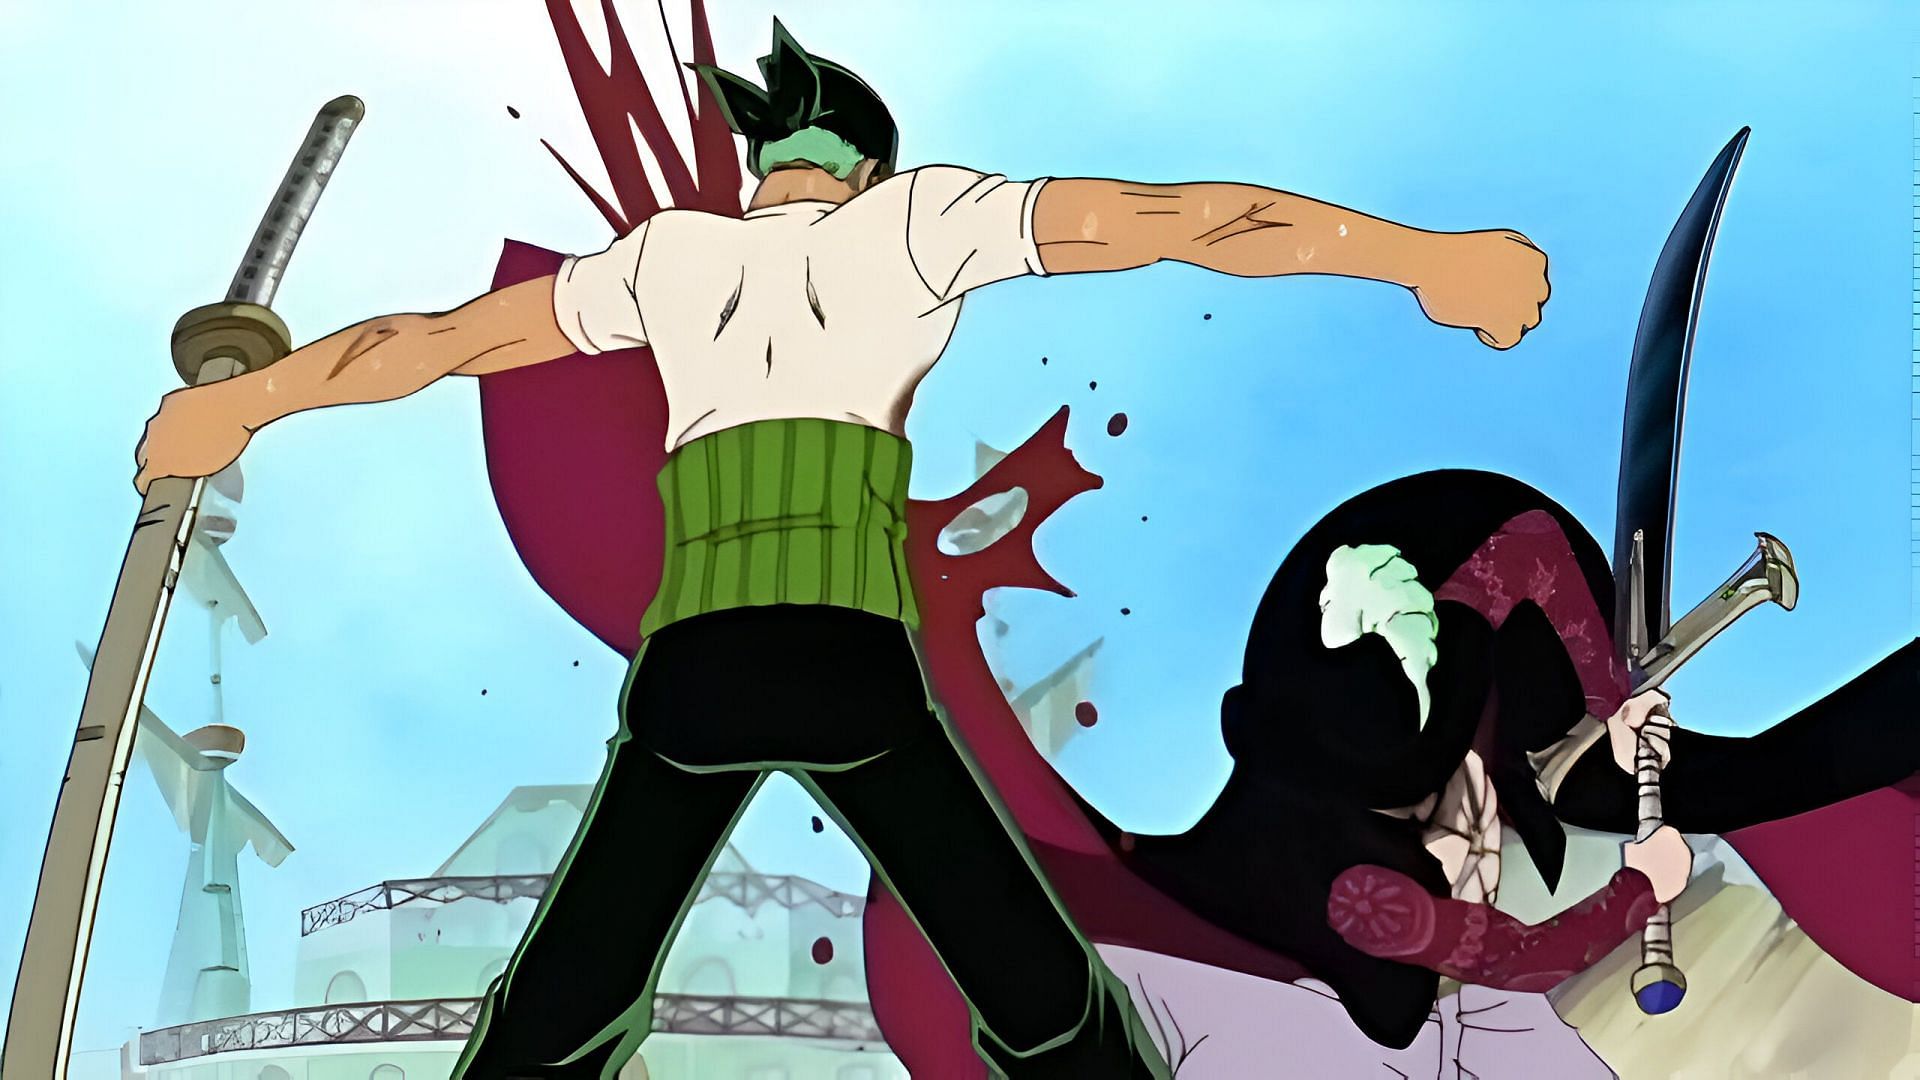 Zoro getting slashed by Mihawk (Image via Toei Animation)